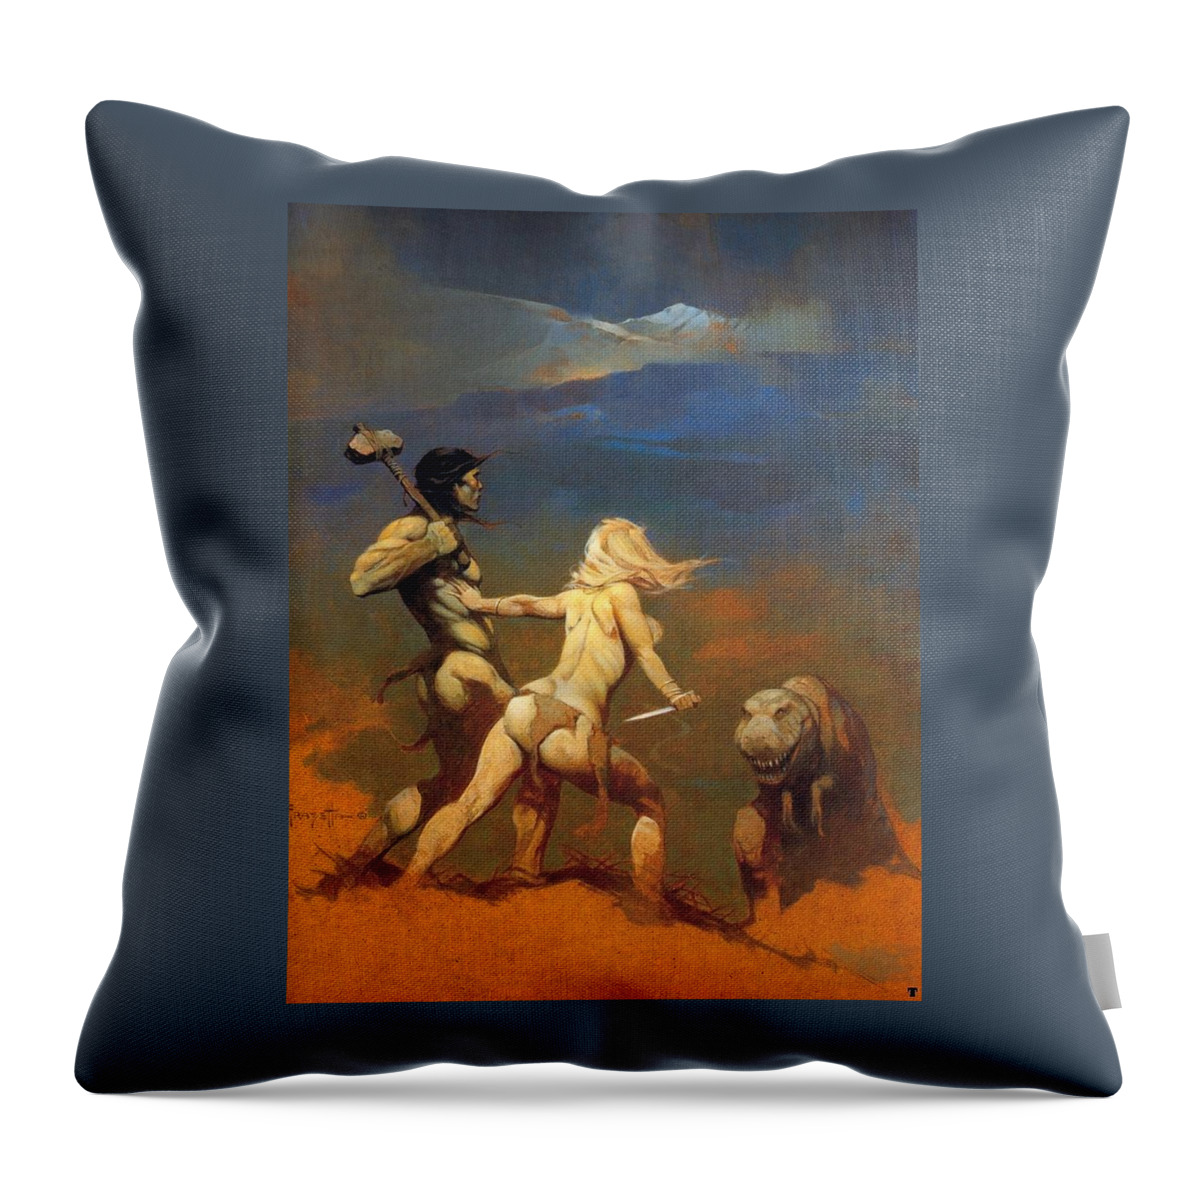 Frank Frazetta Throw Pillow featuring the painting Cornered by Frank Frazetta